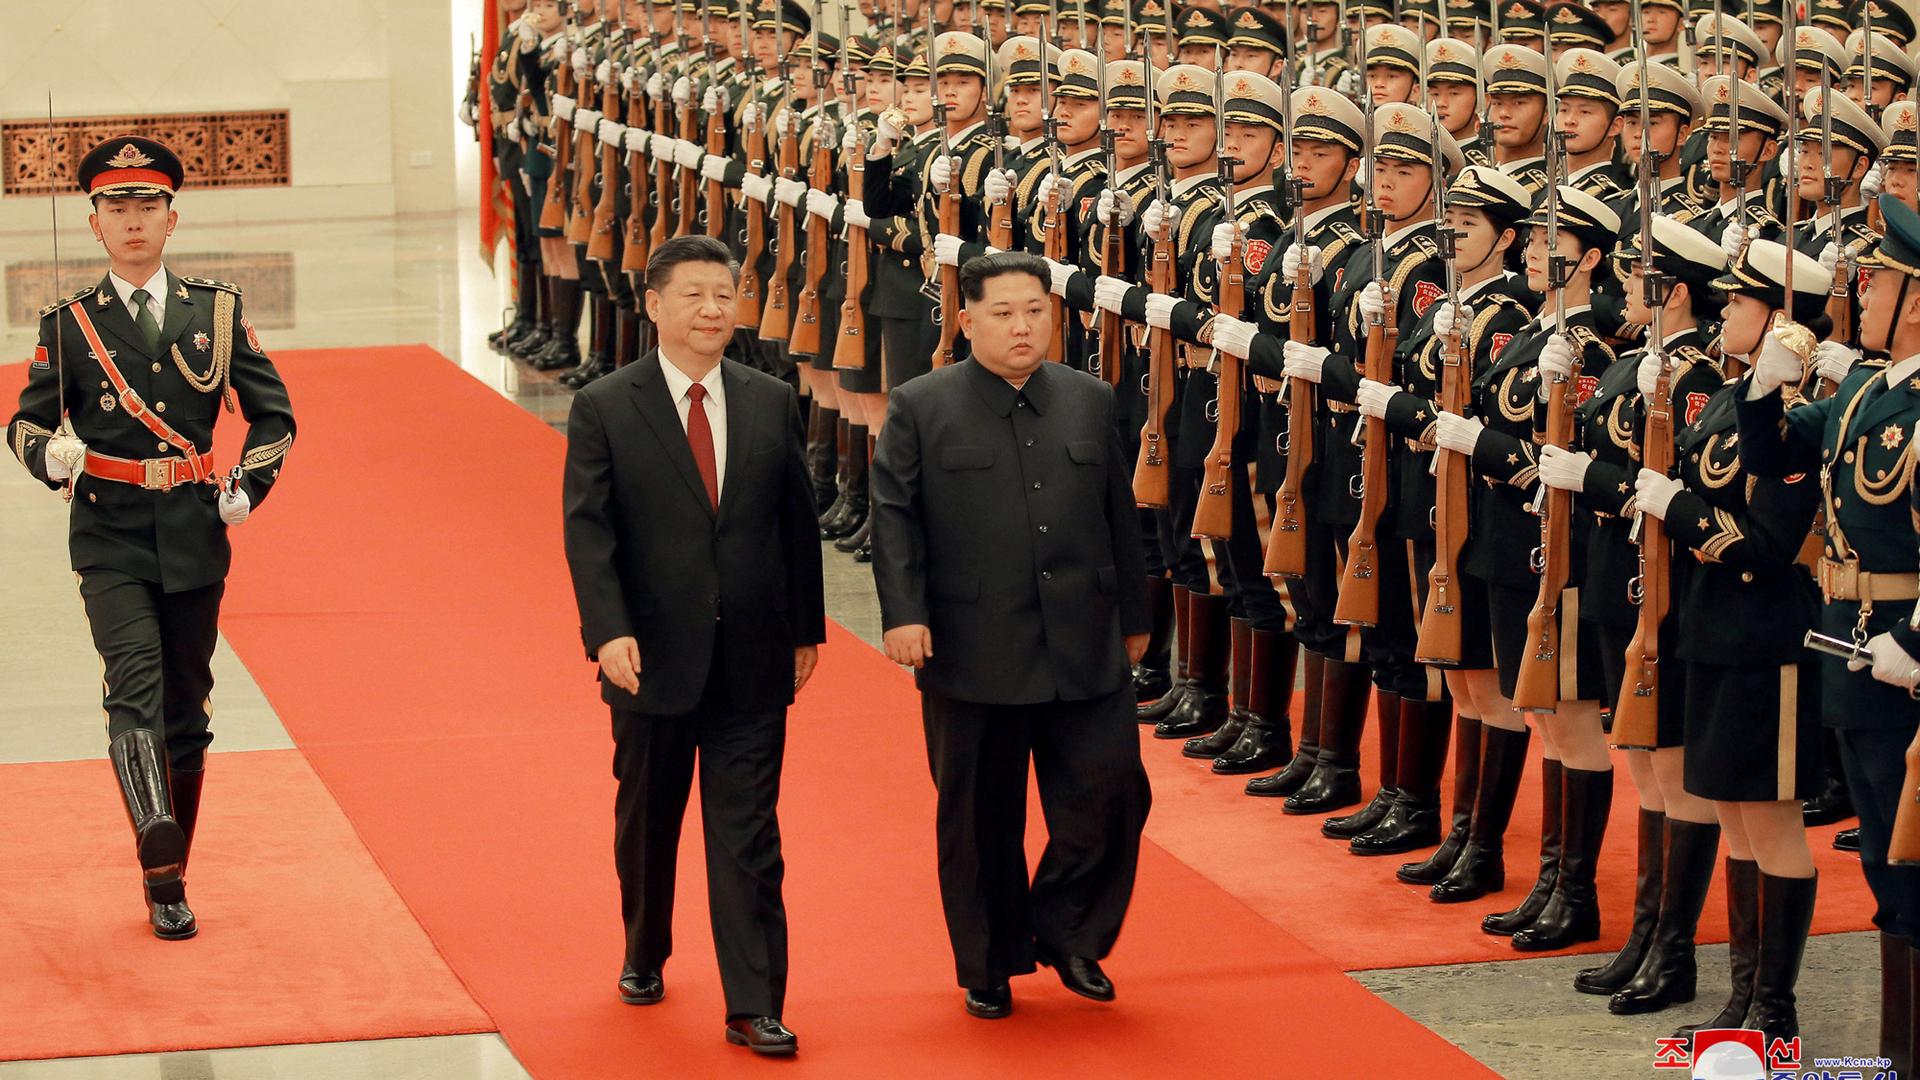 North Korean leader Kim Jong-un and Chinese President Xi Jinping walk past an rifle-clad honor guard.